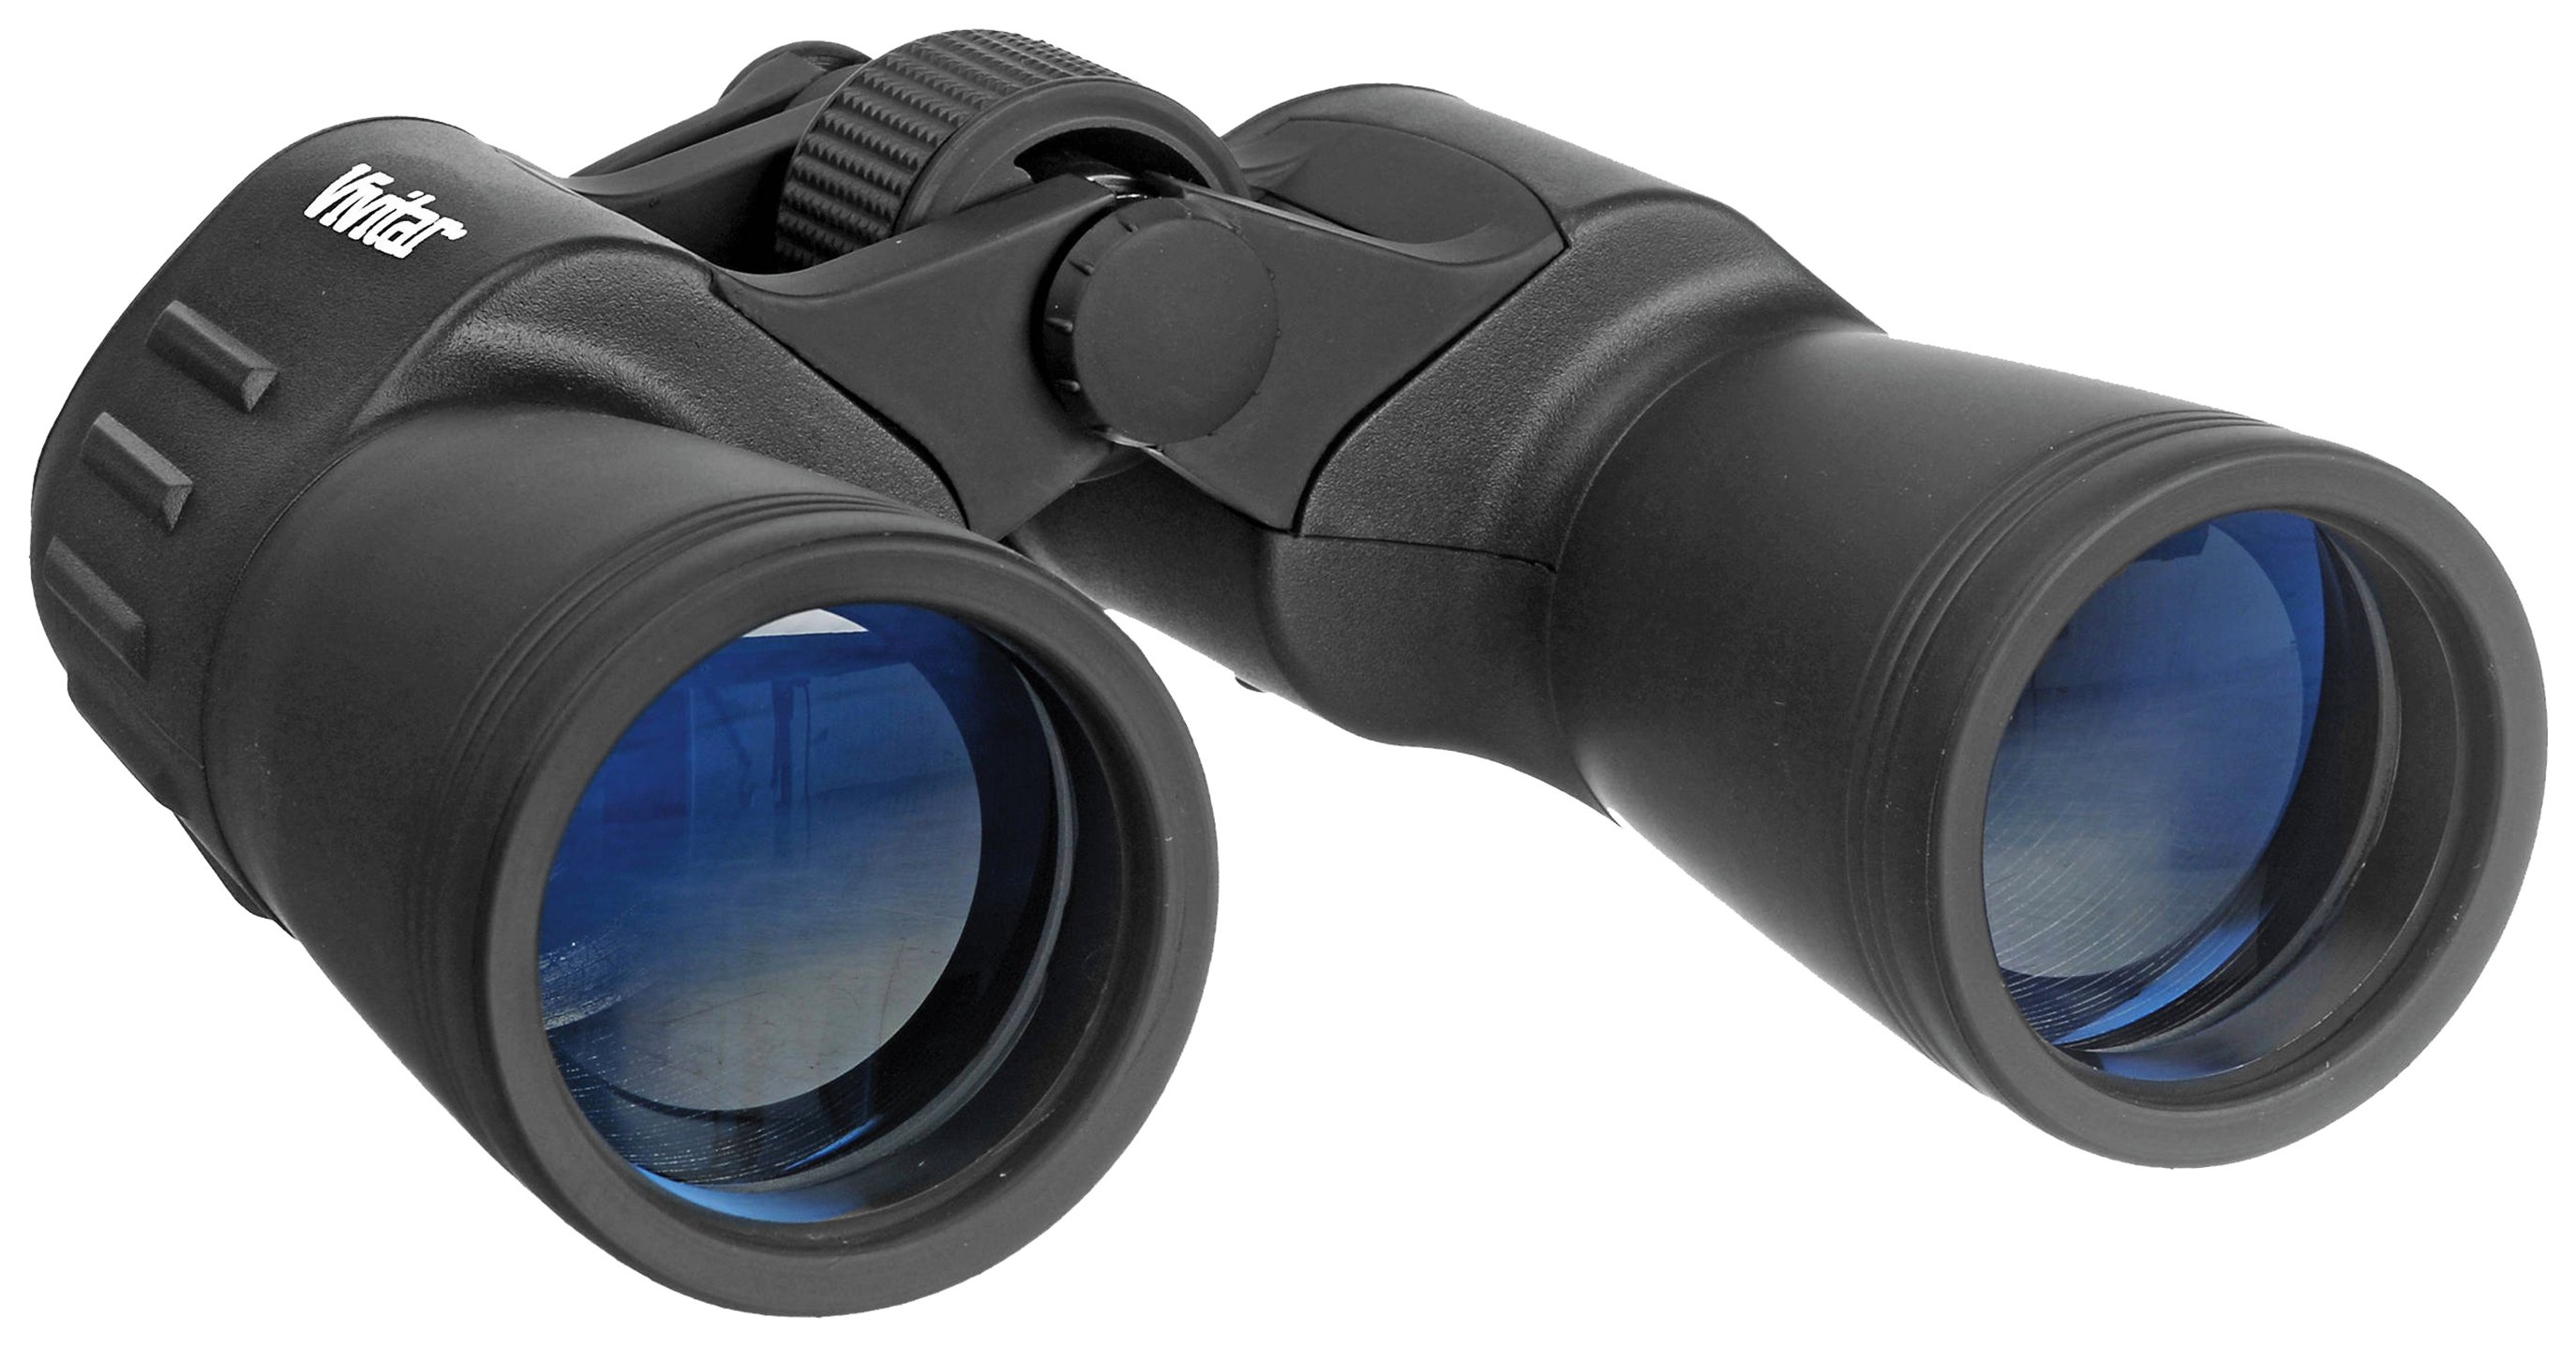 Vivitar - Binoculars - OM-1050 10x50 Review